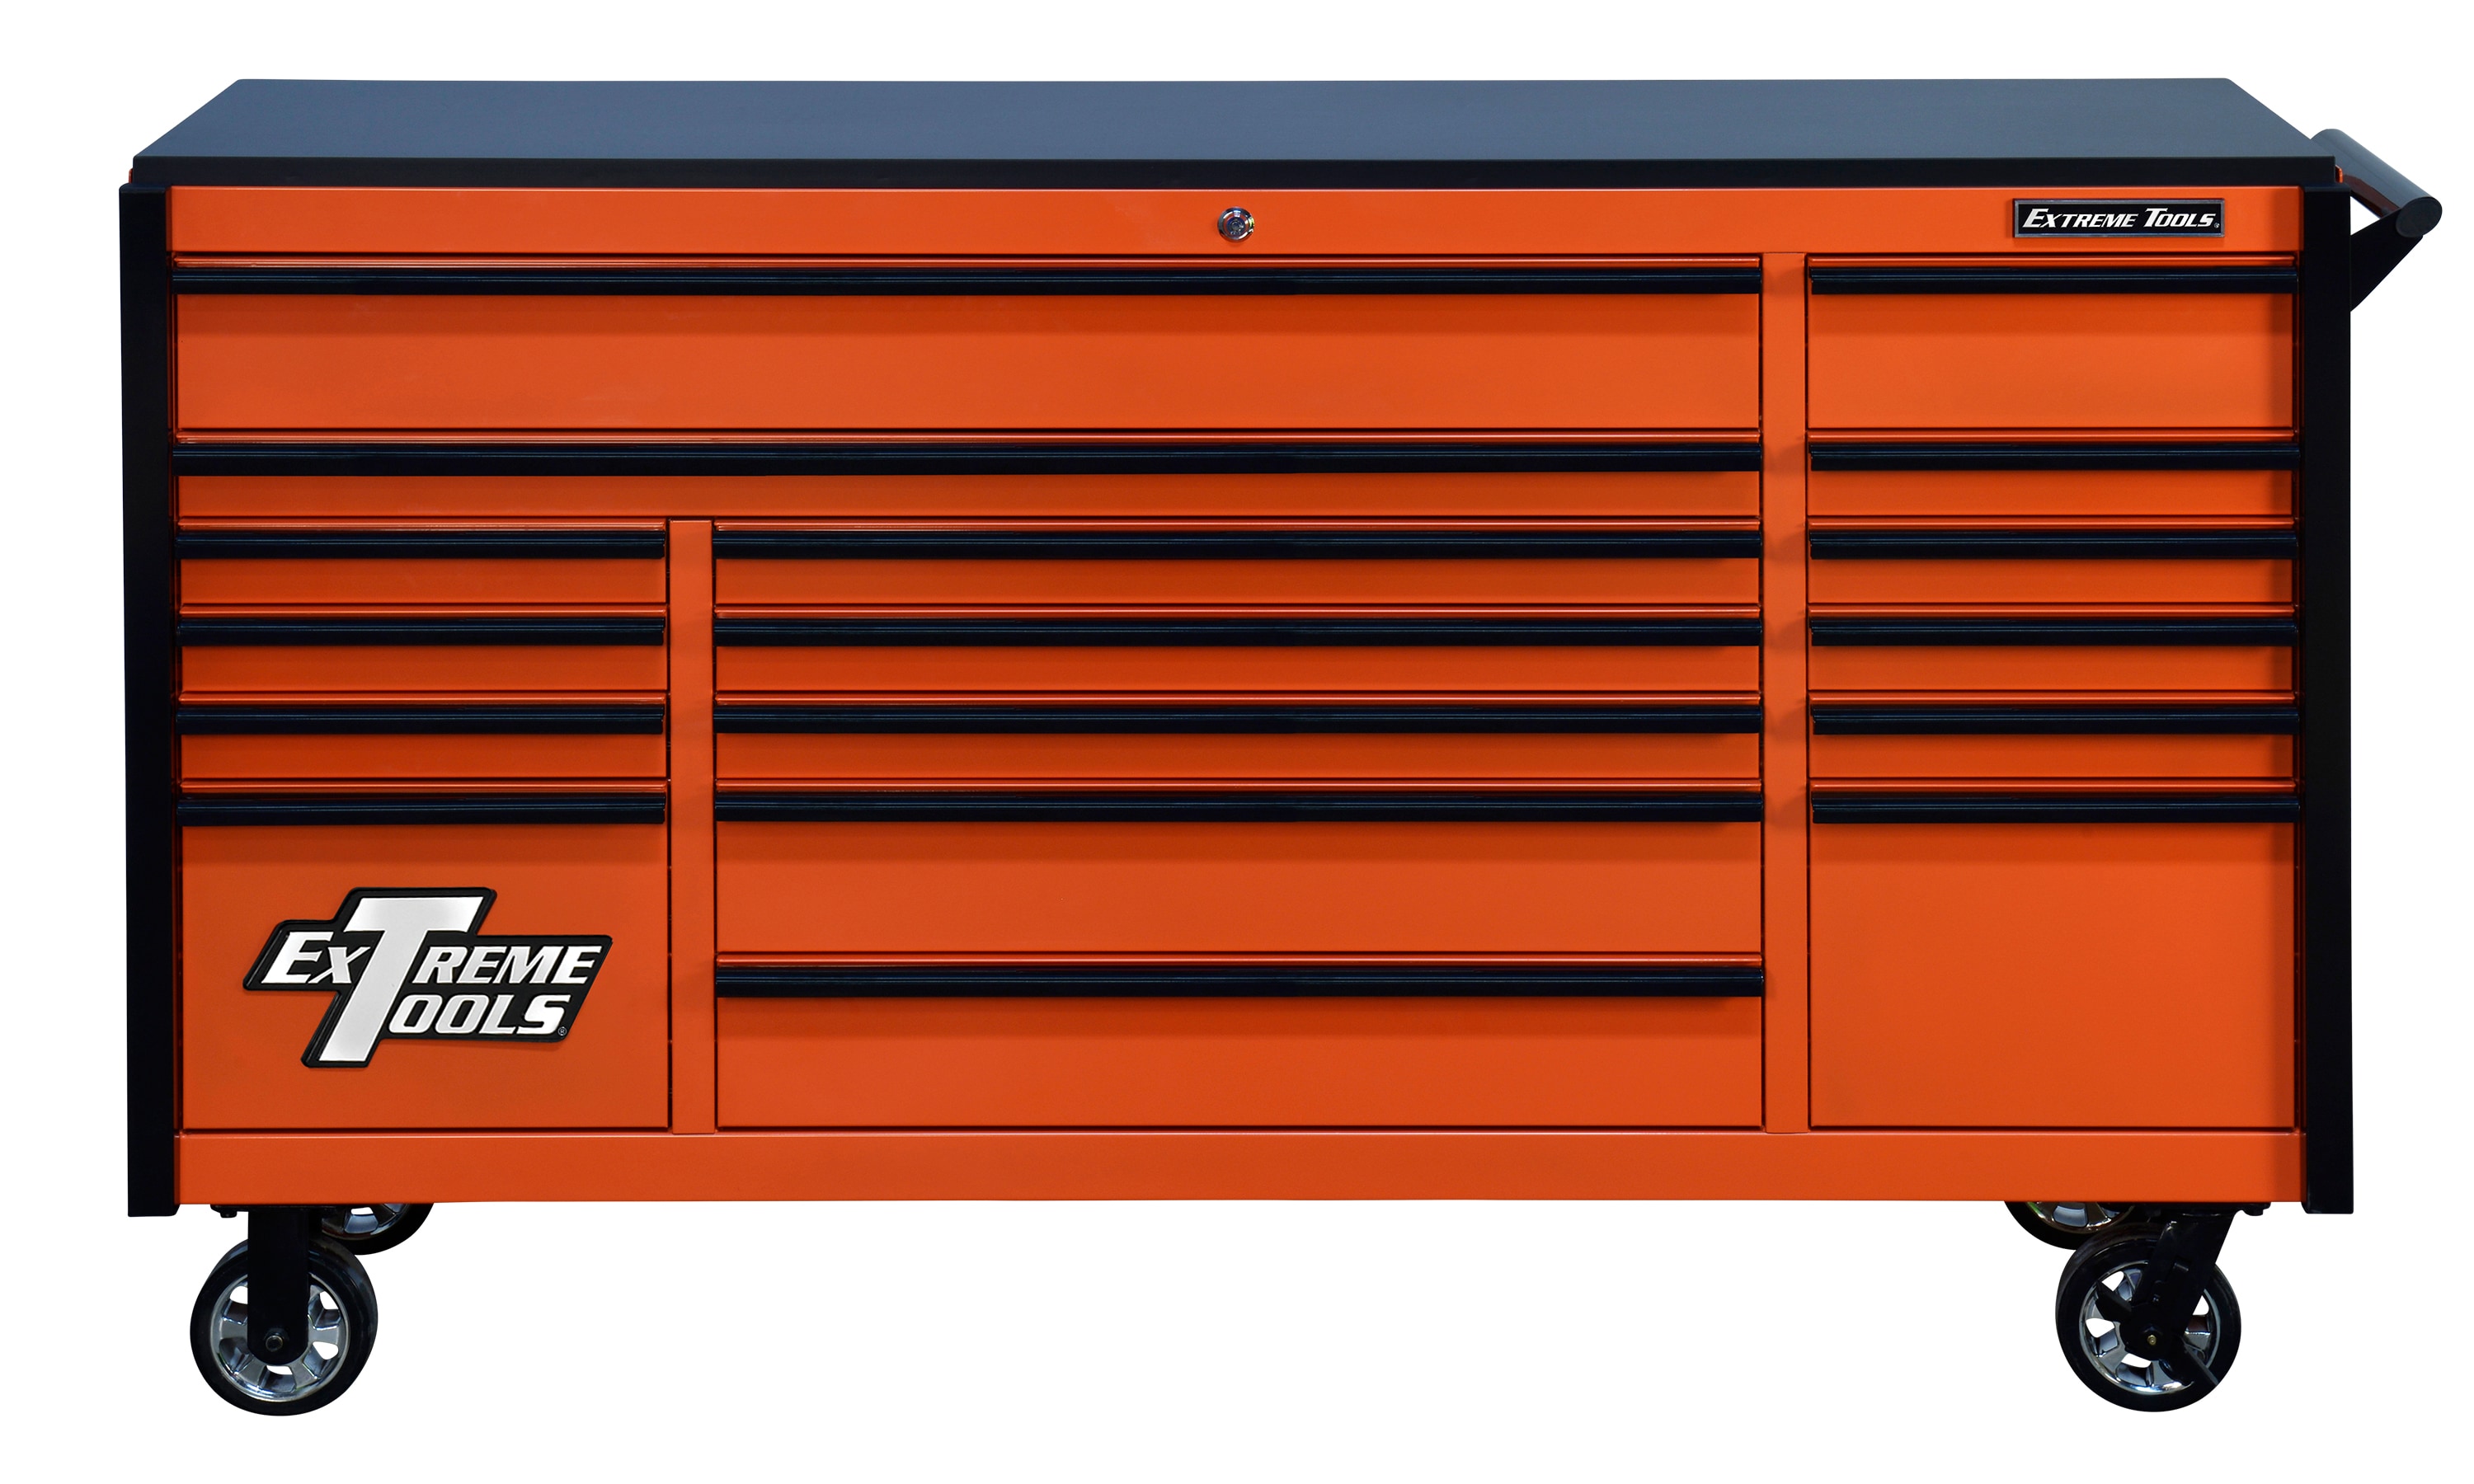 Extreme Tools 72 DX Series 17-Drawer Roller Cabinet - Orange w/Black Drawer Pulls